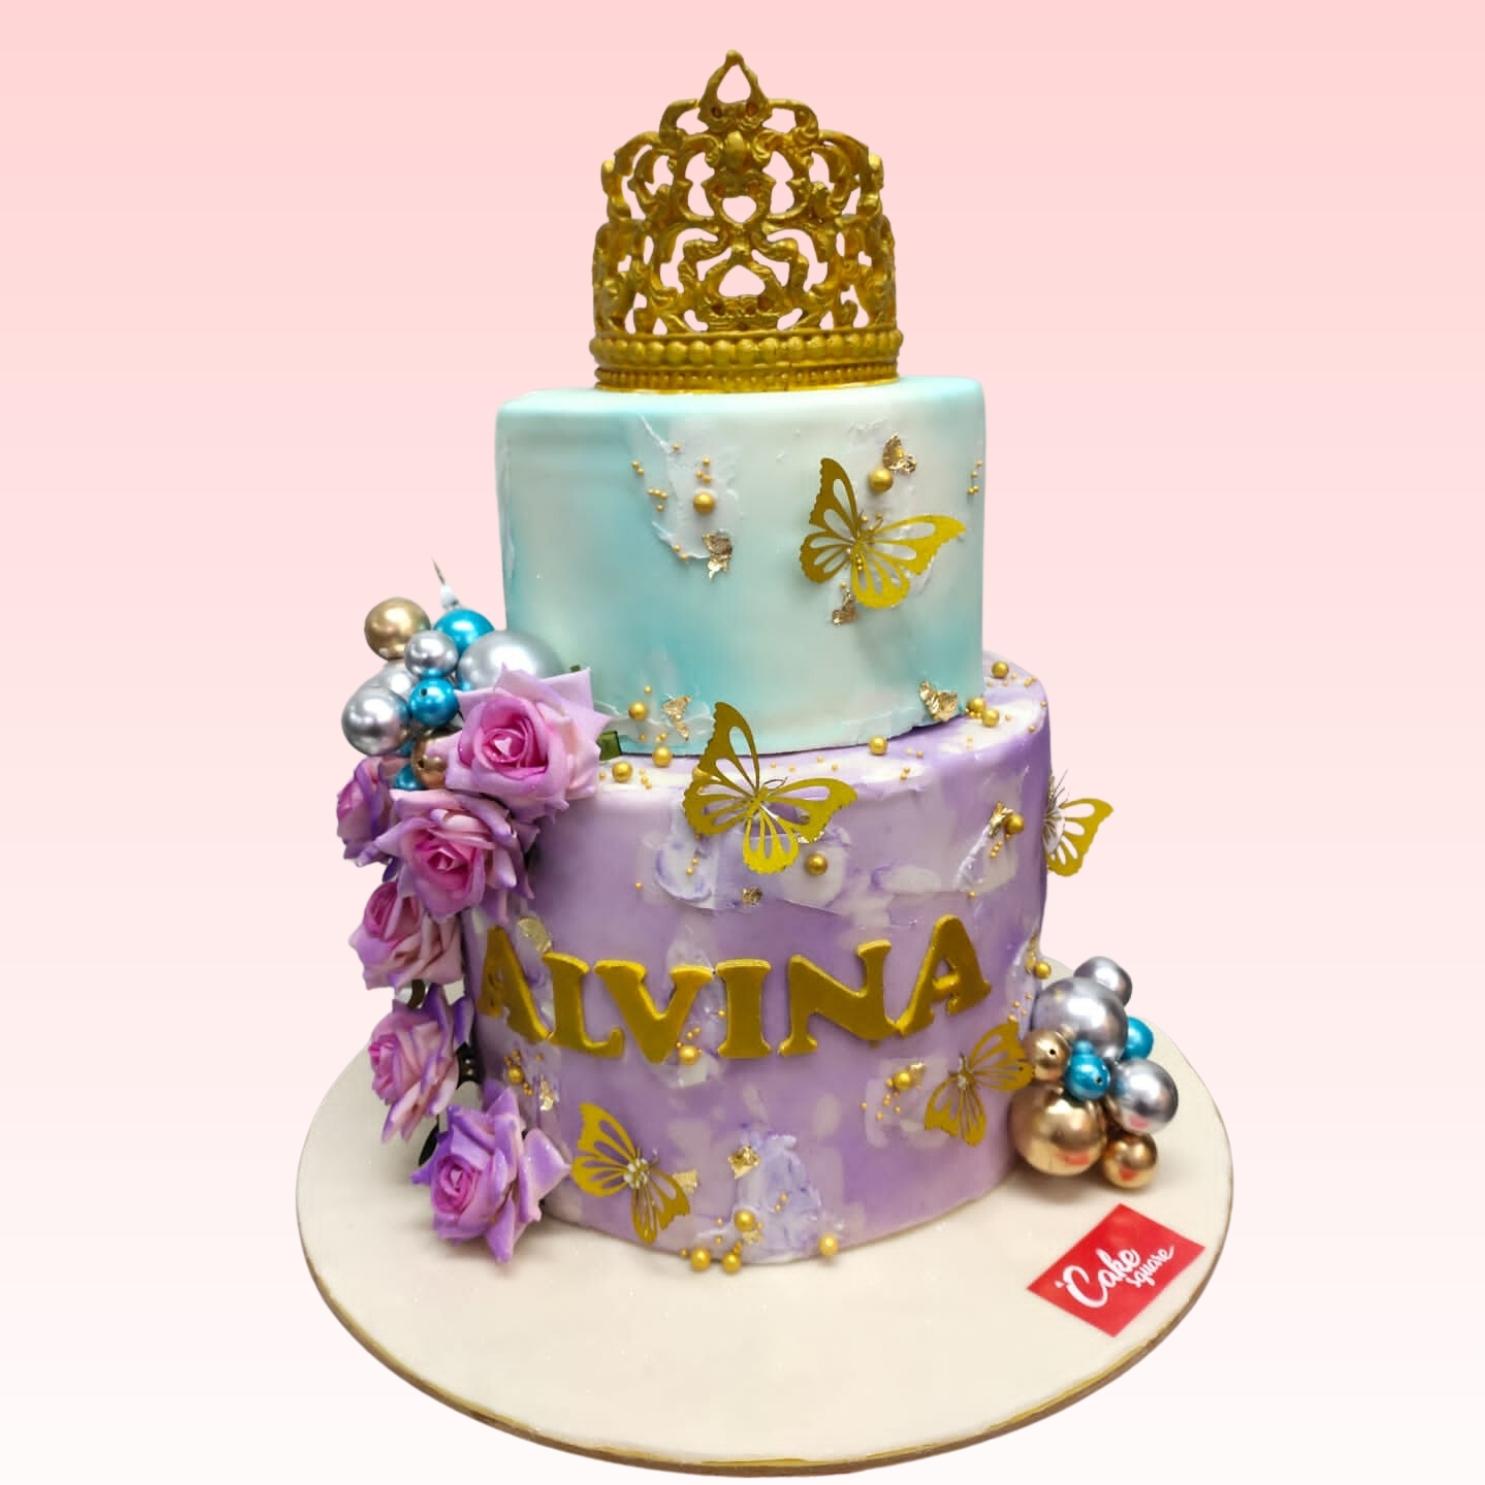 Cake Affairs - Unicorn cake with pastel rainbow colors! | Facebook